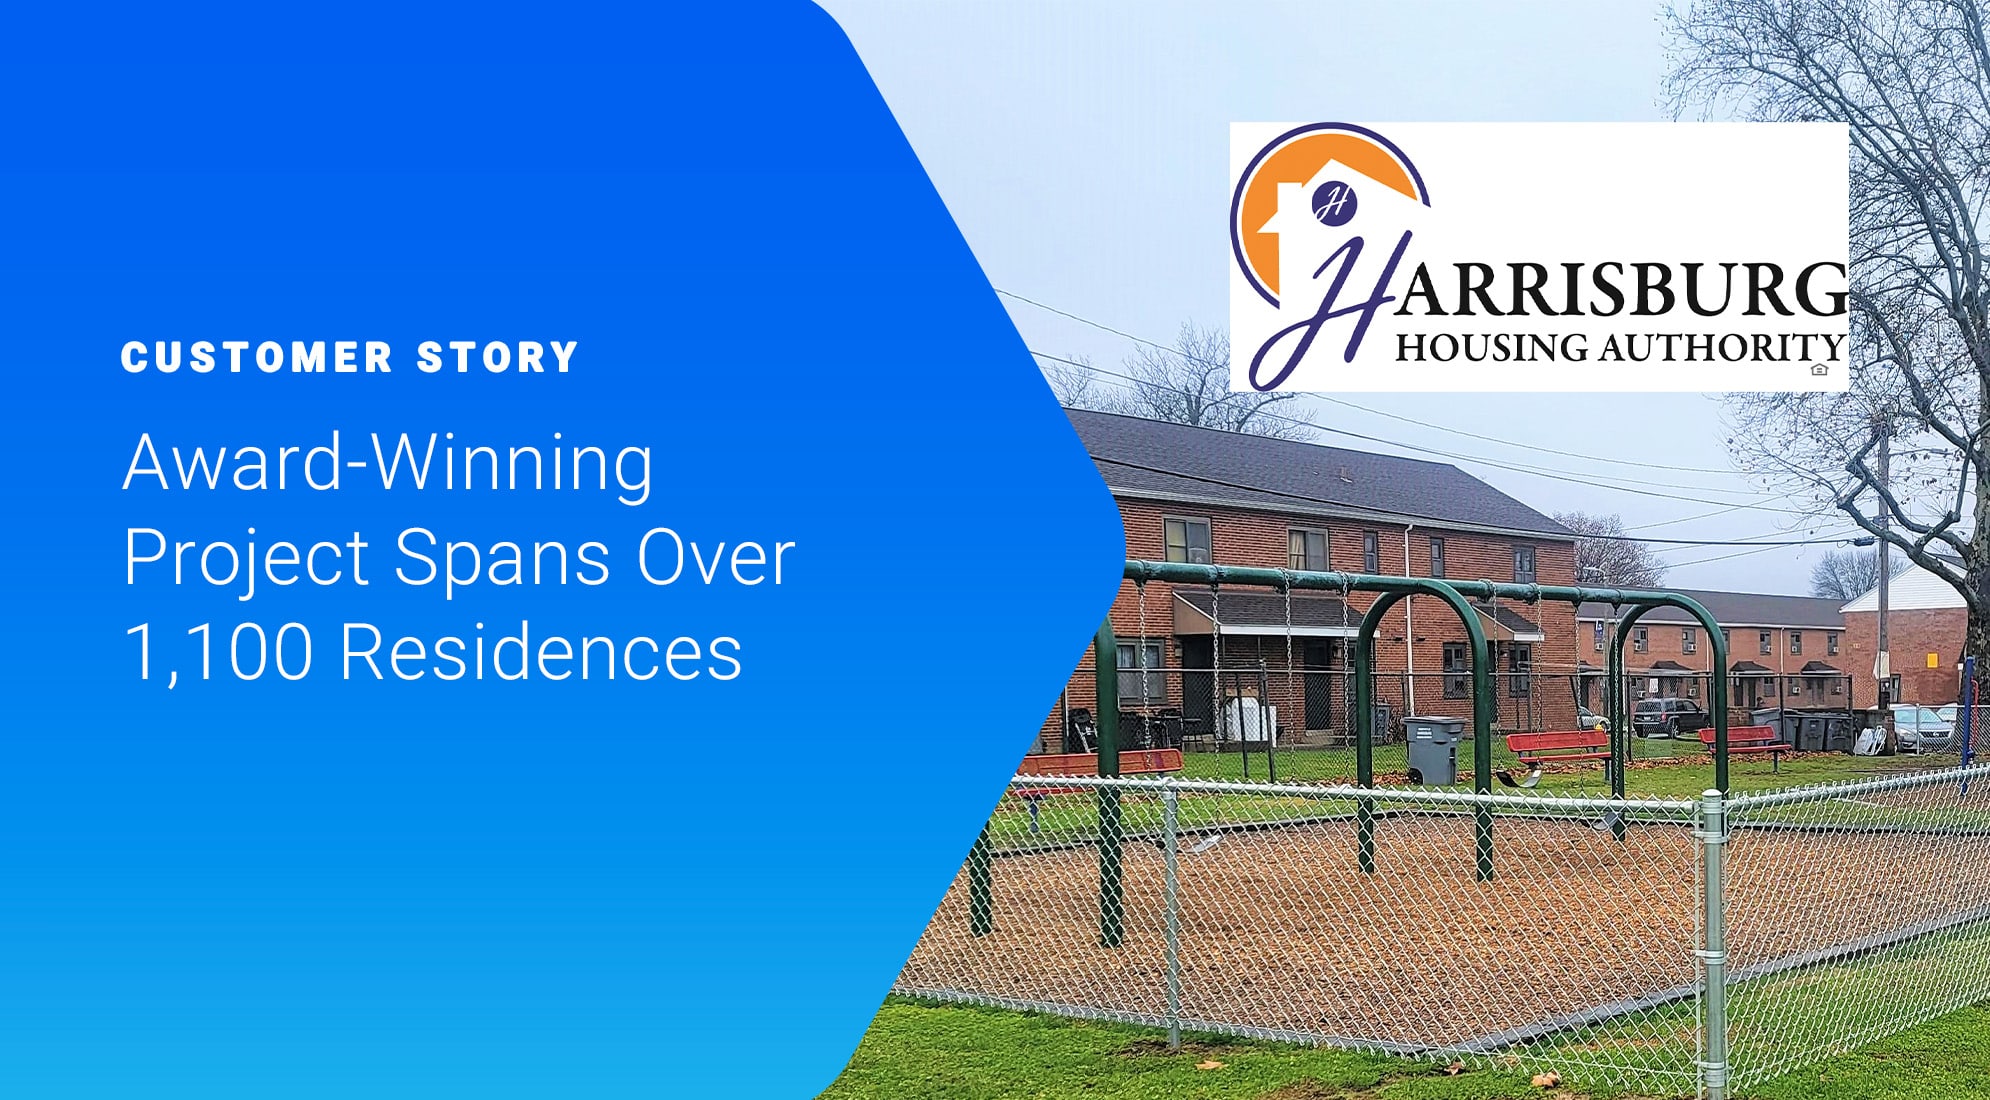 Harrisburg Housing Authority (HHA) Makes Sweeping Community Improvements 7